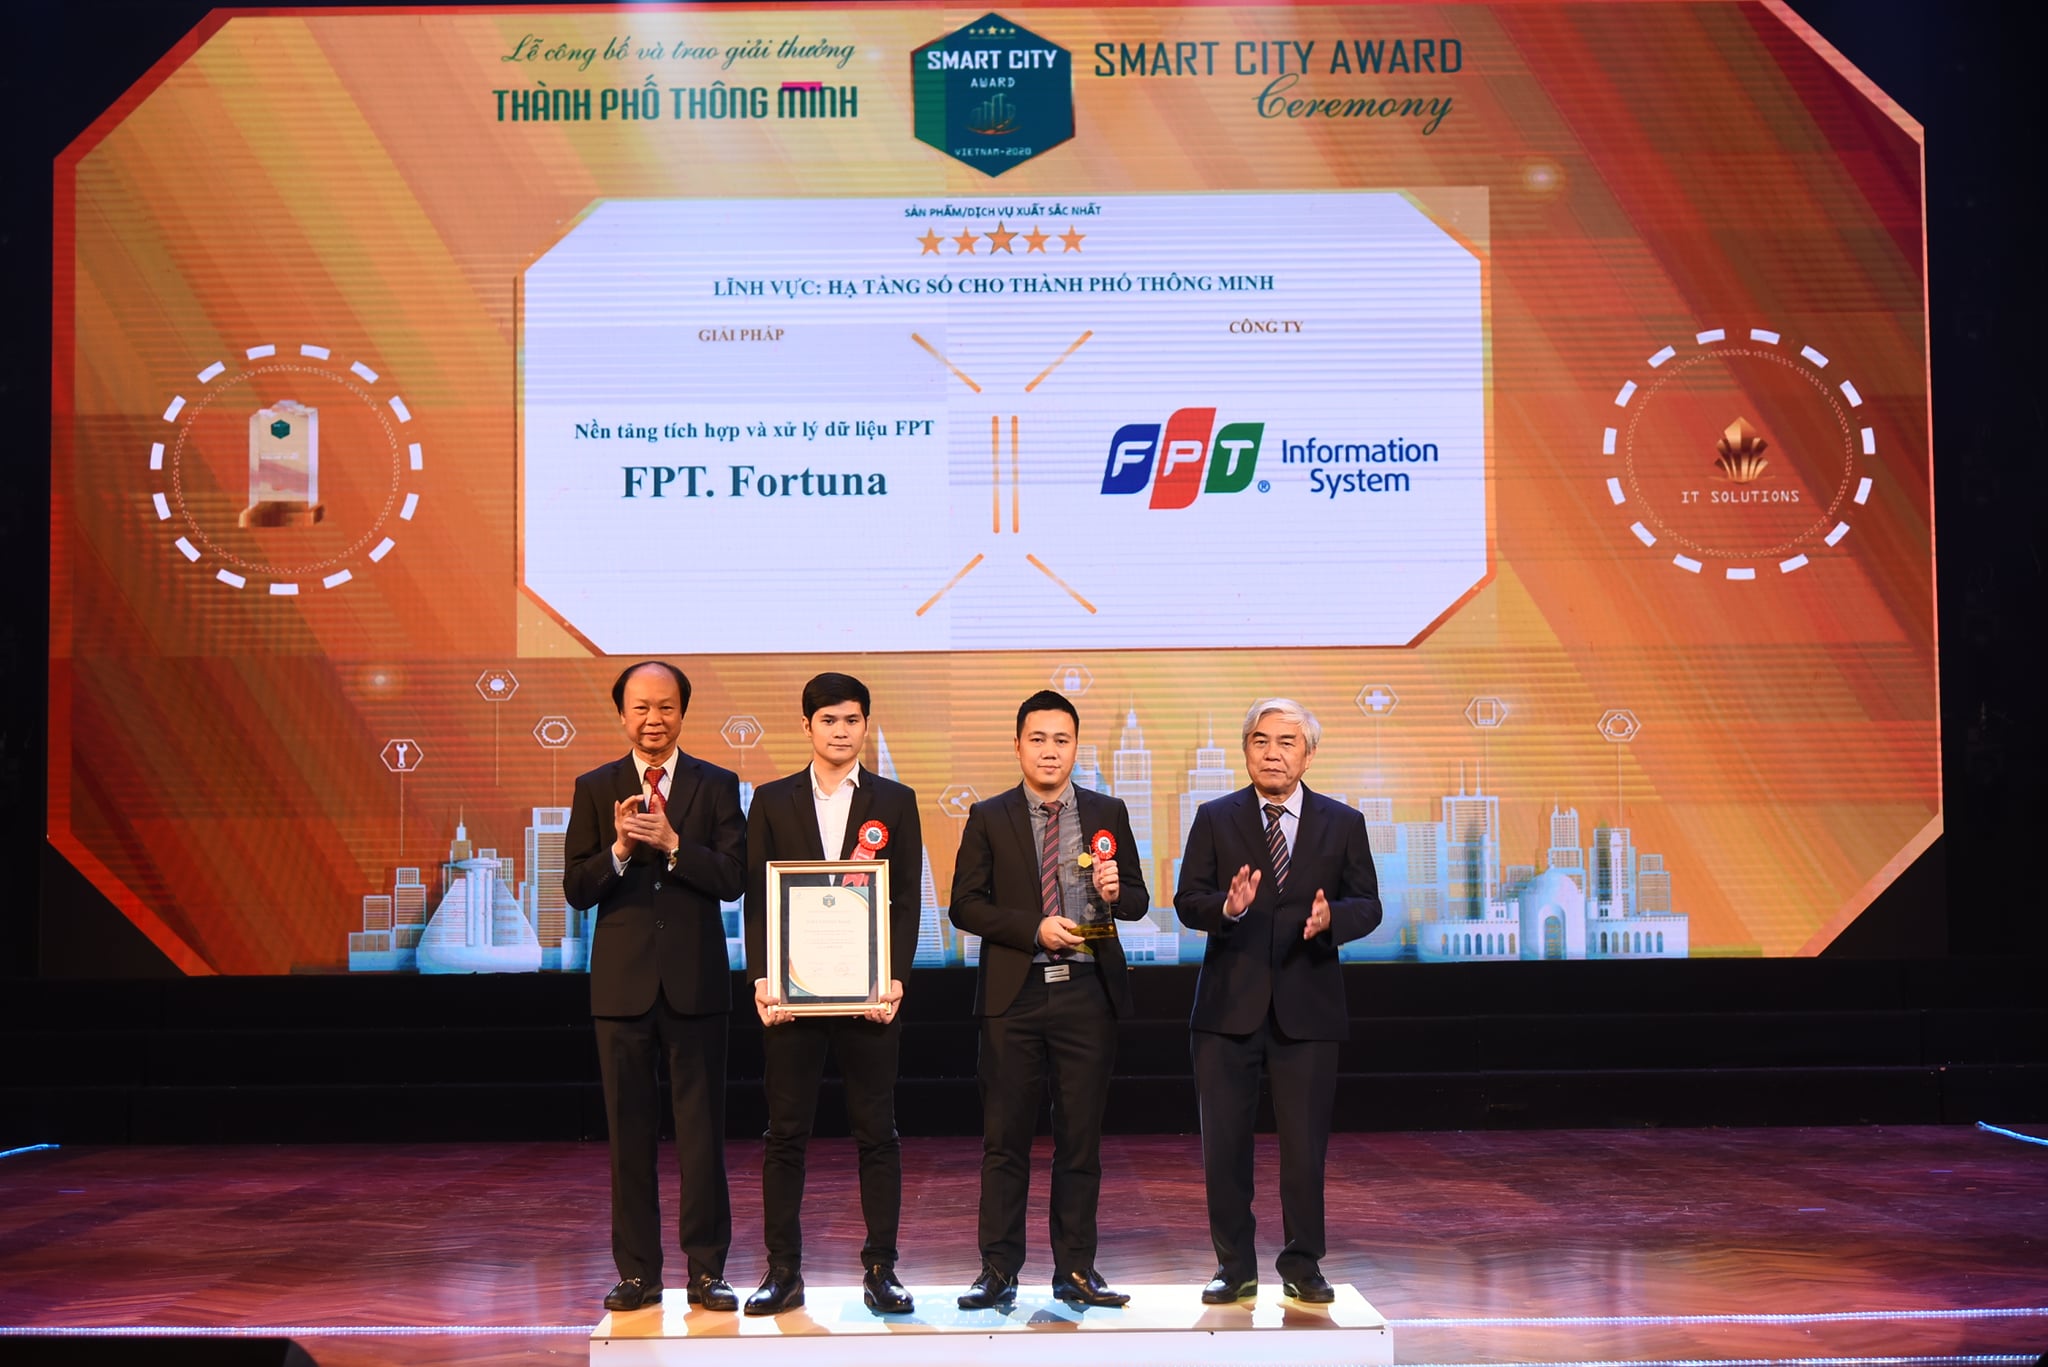 2020 Vietnam Smart City Awards (5-star) – FPT Data Processing and Integration Platform (FPT.Fortuna)